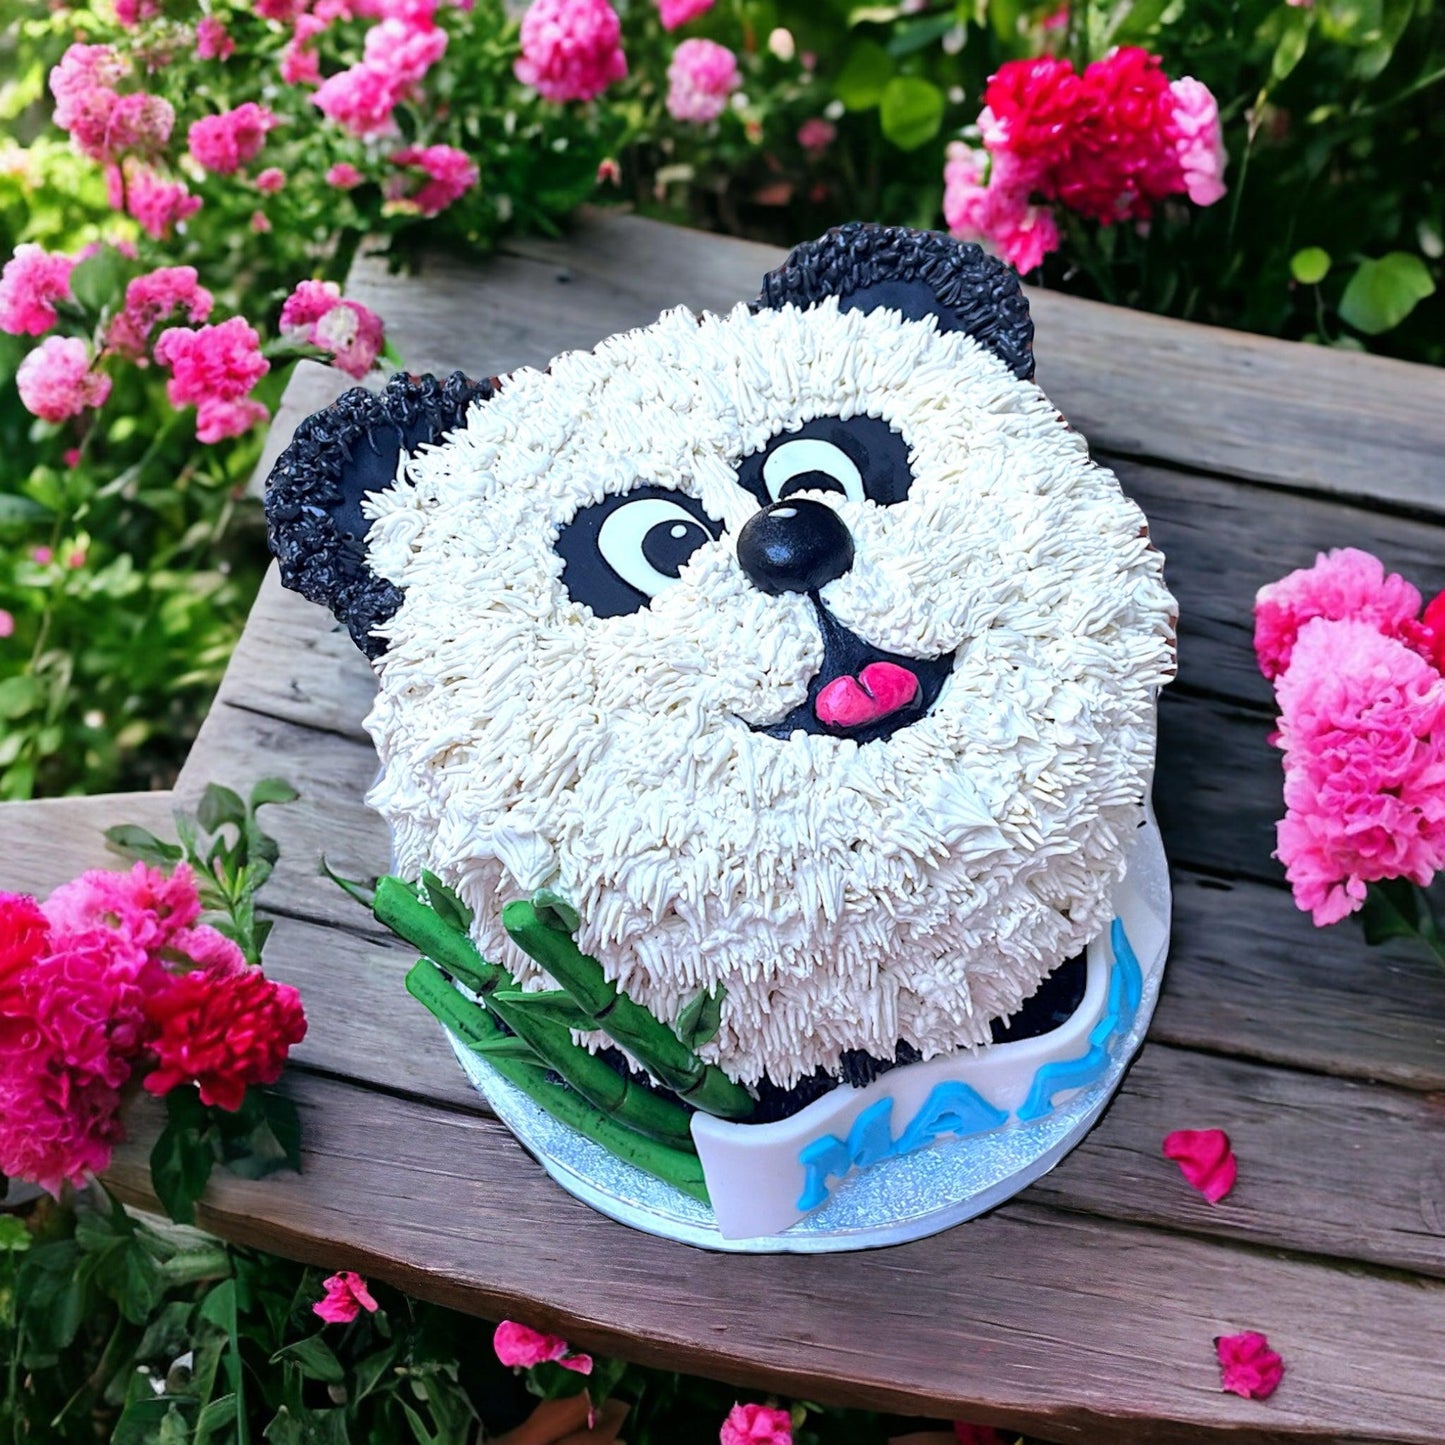 Panda Birthday cake - Naturally_deliciousss